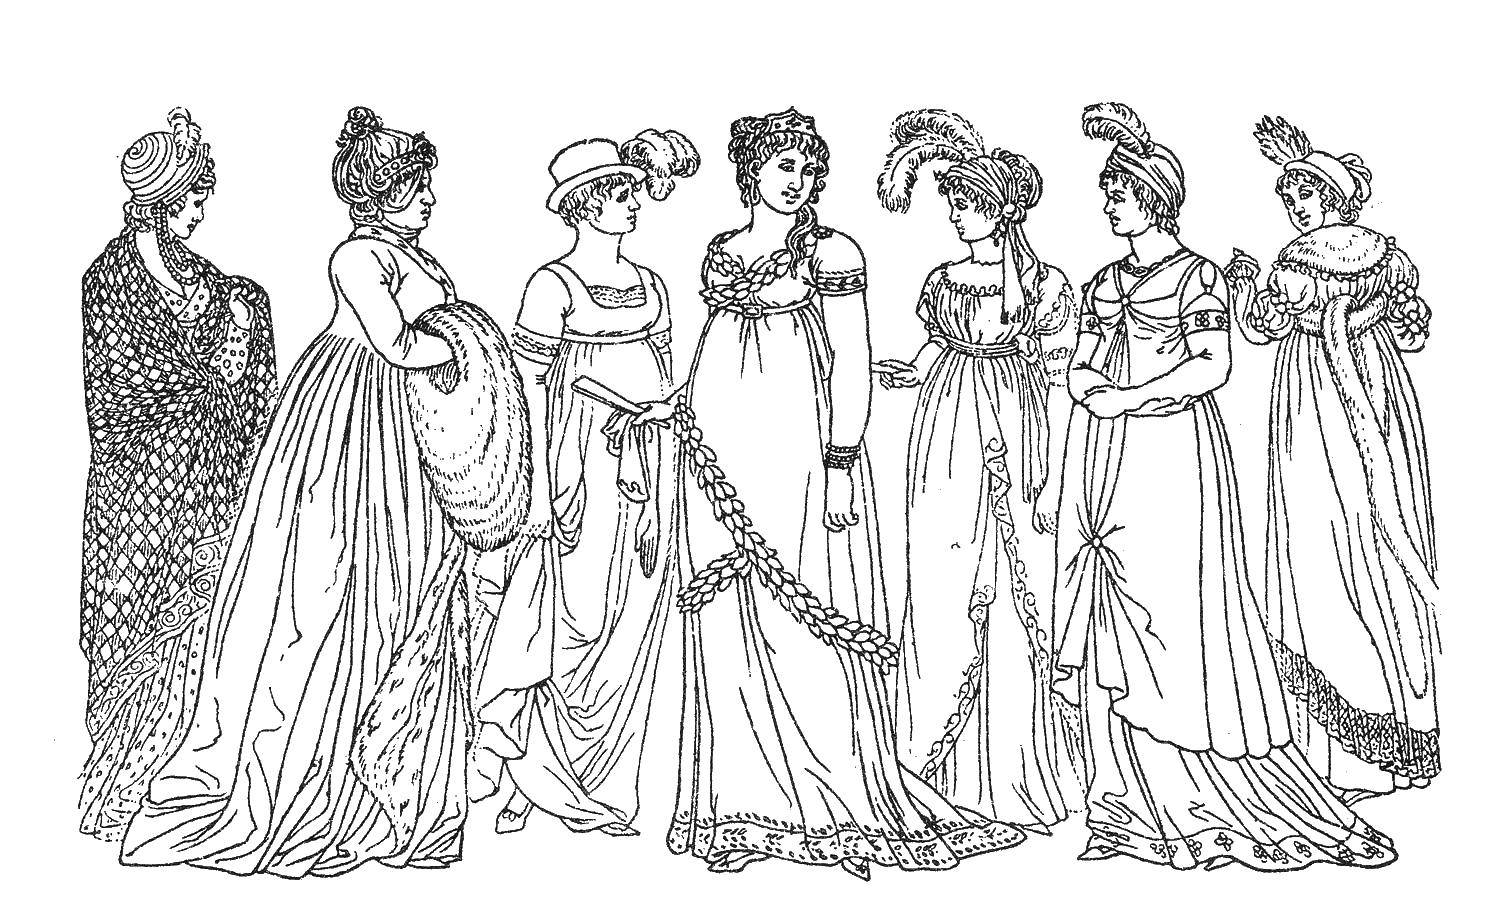 Coloring Ladies in beautiful dresses. Category Dress. Tags:  dresses, girls, ladies.